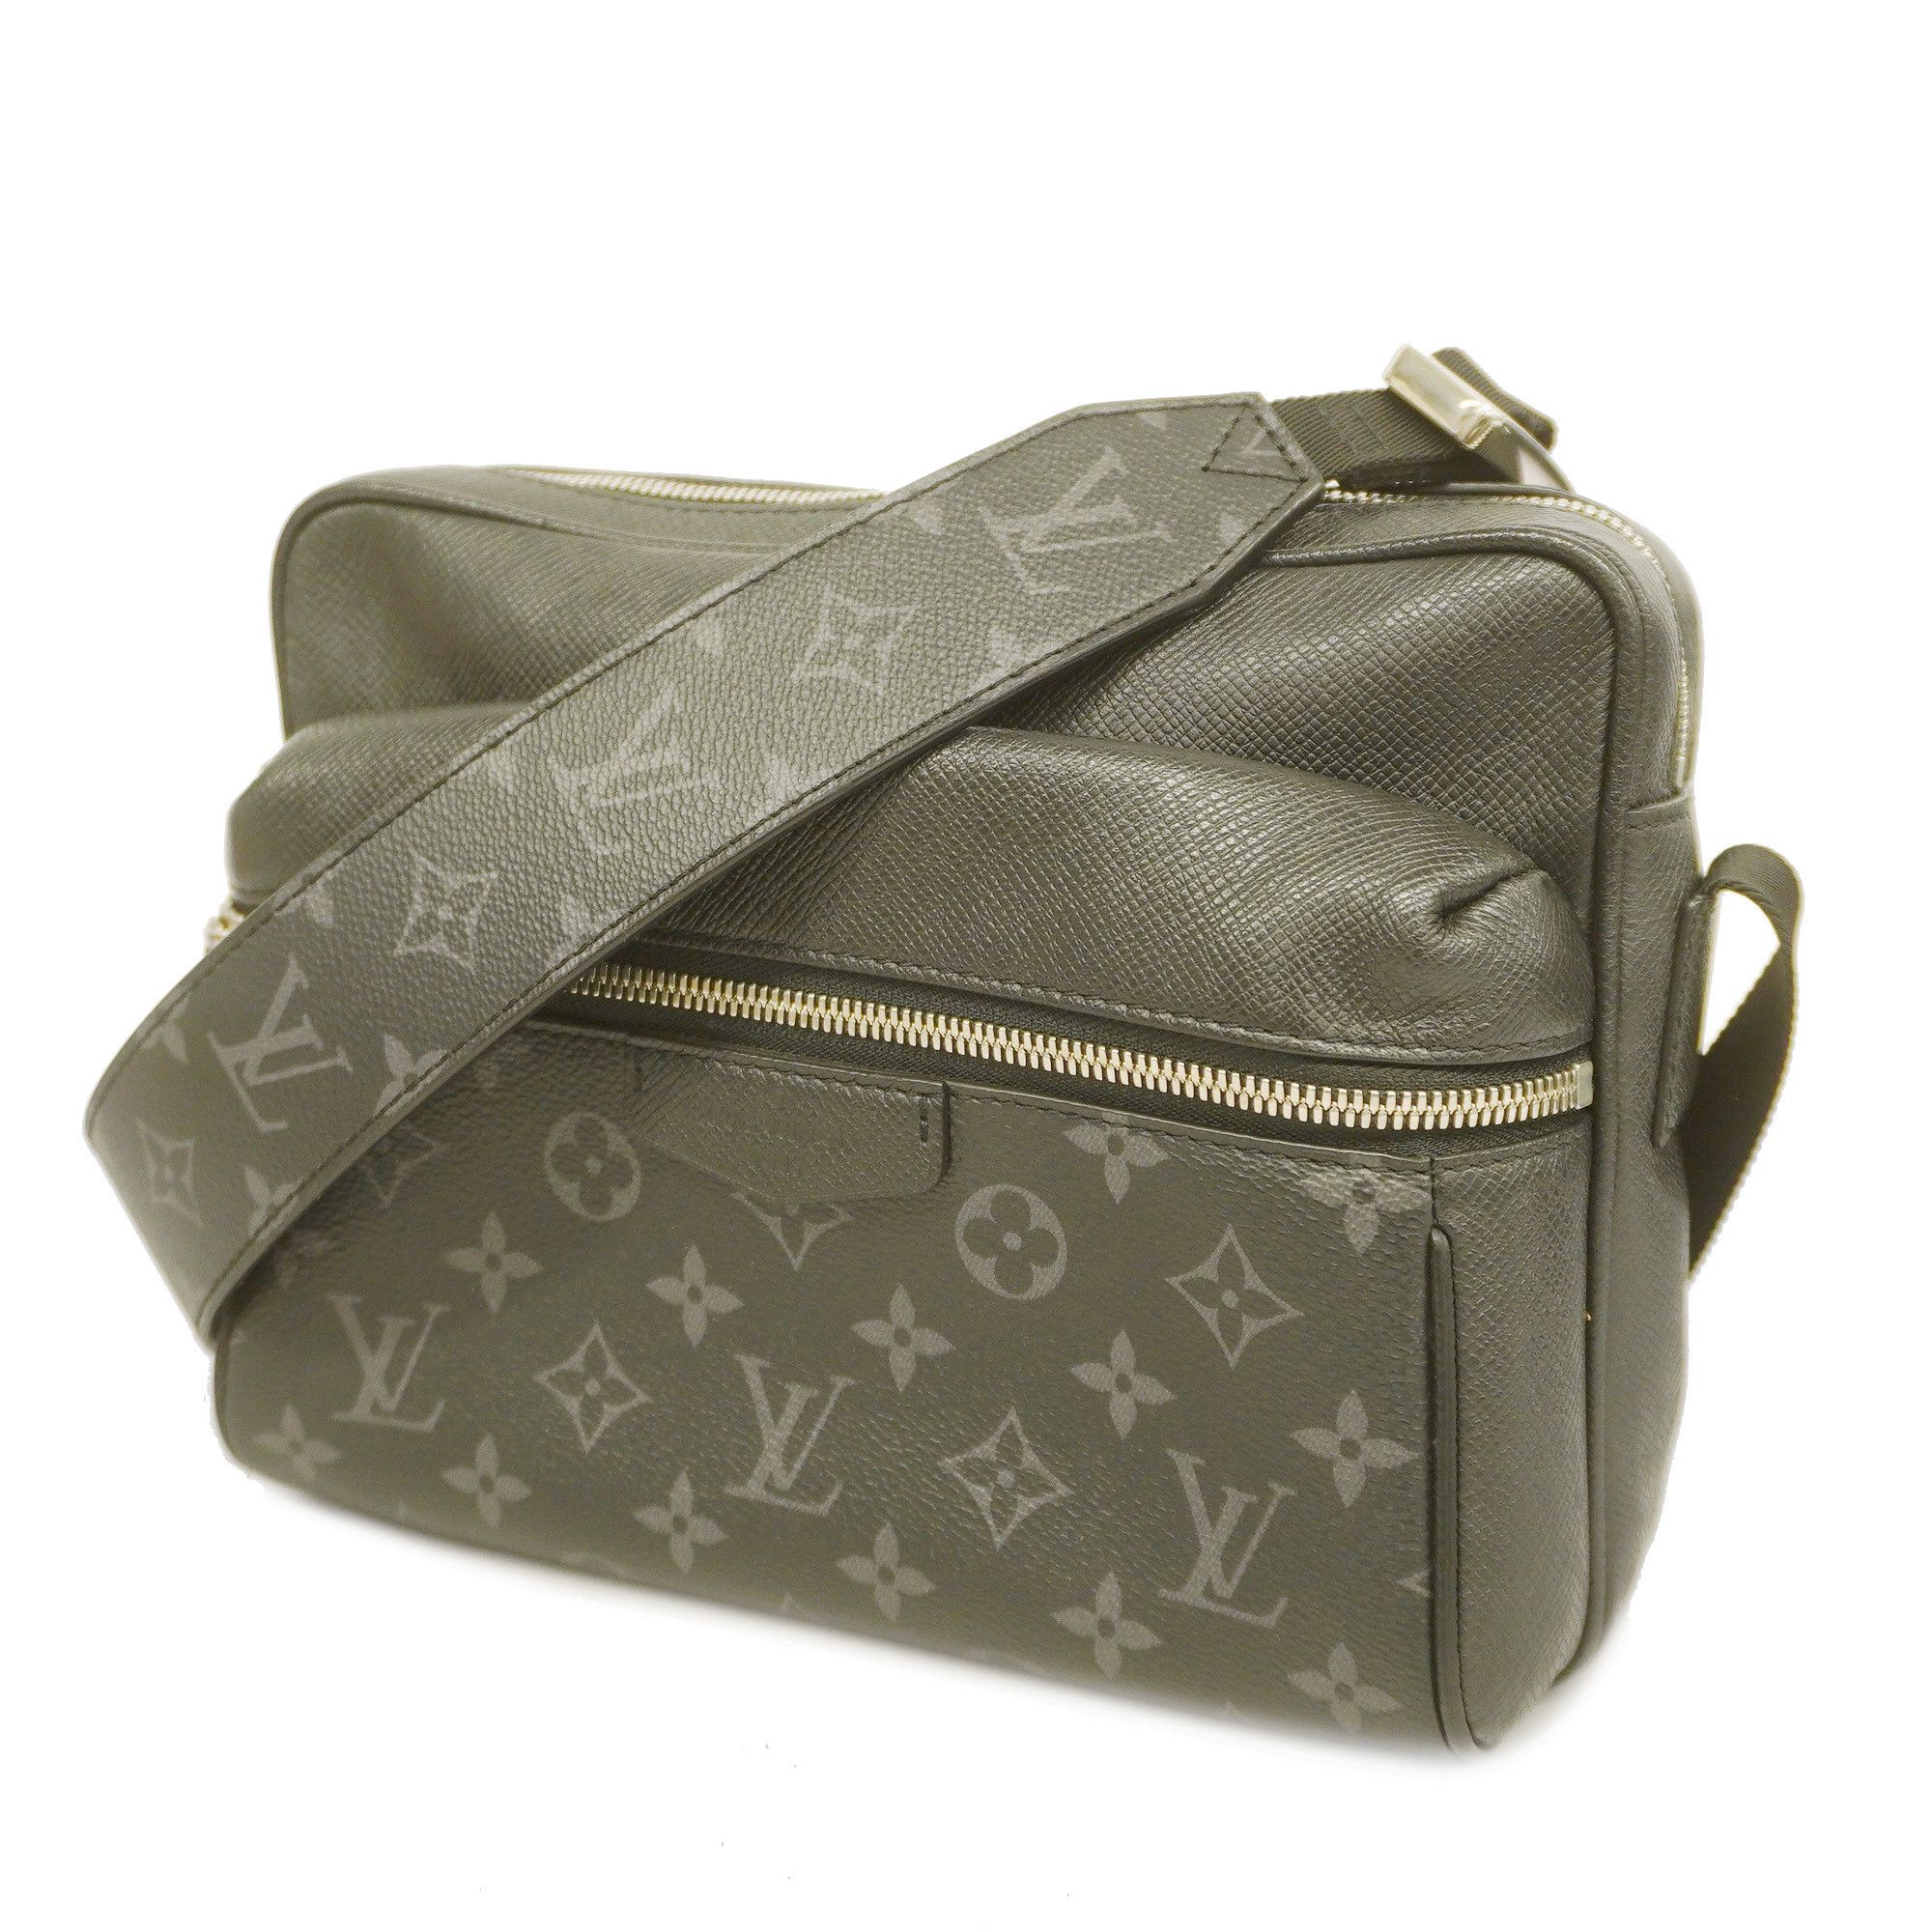  Louis Vuitton M30233 Tigarama Outdoor Messenger PM Noir Men's  Messenger Bag, gray : Clothing, Shoes & Jewelry